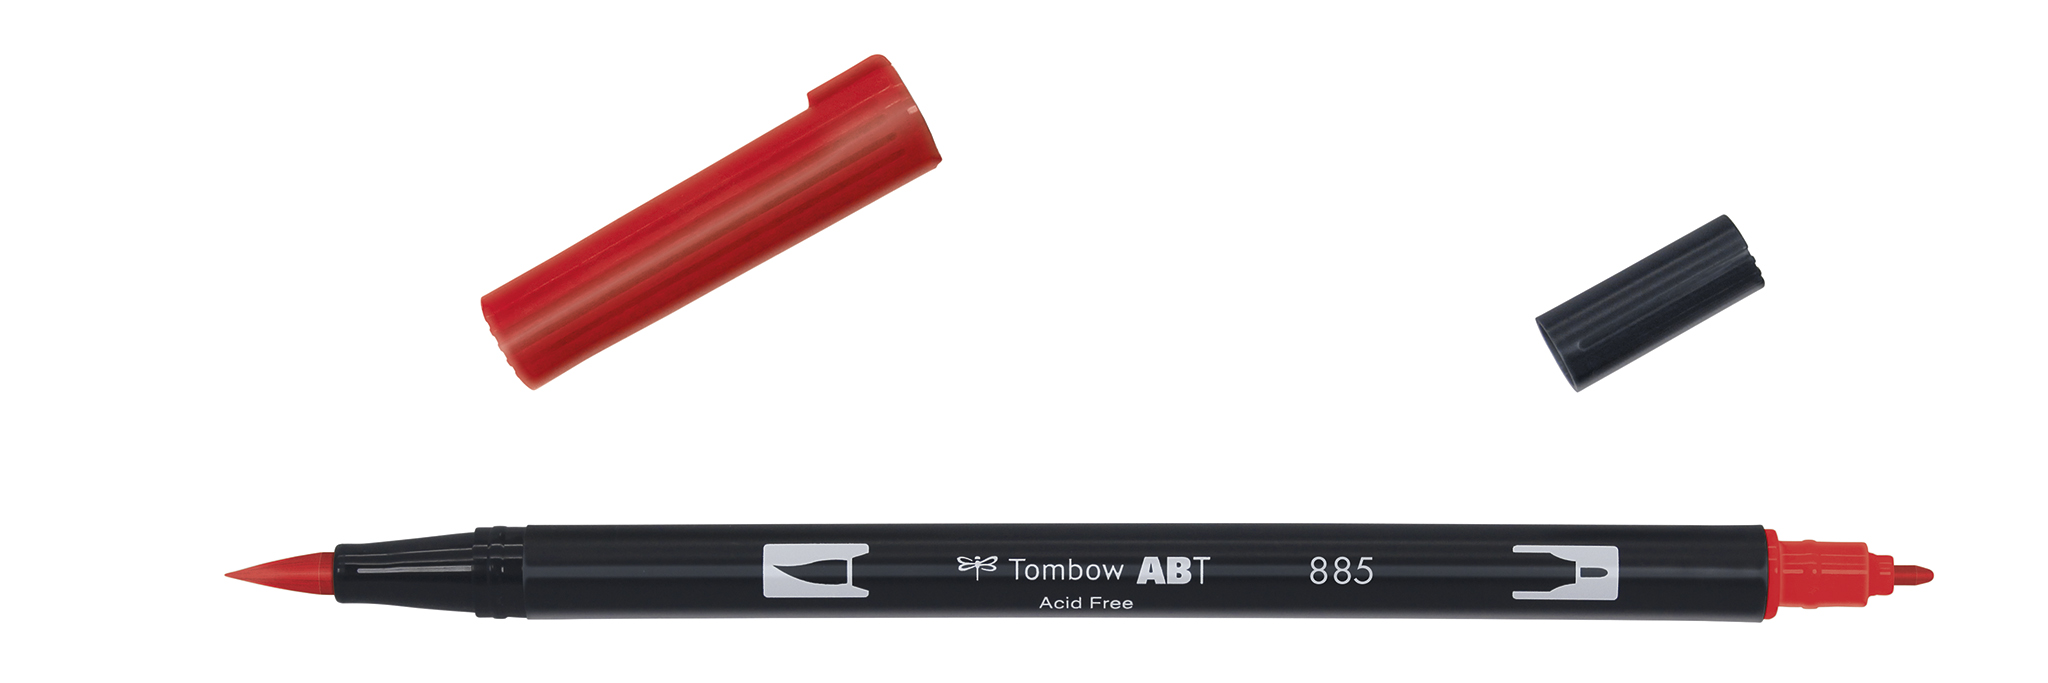 Tombow ABT Dual Brush 885 varm rød